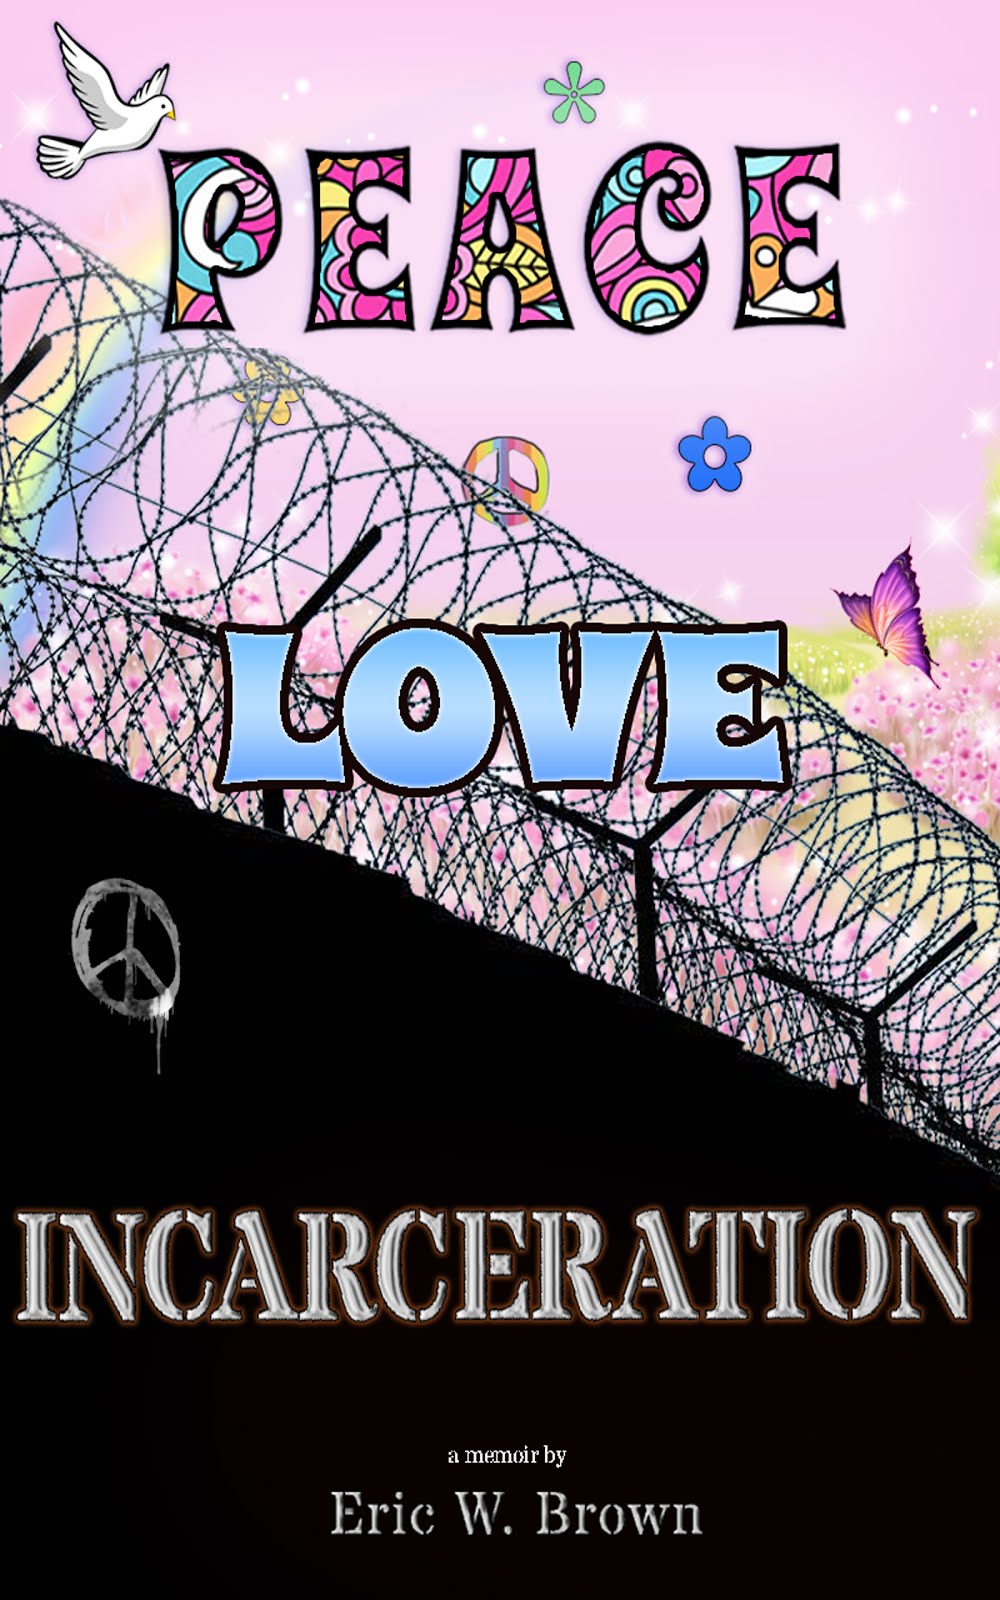 Peace, Love, Incarceration